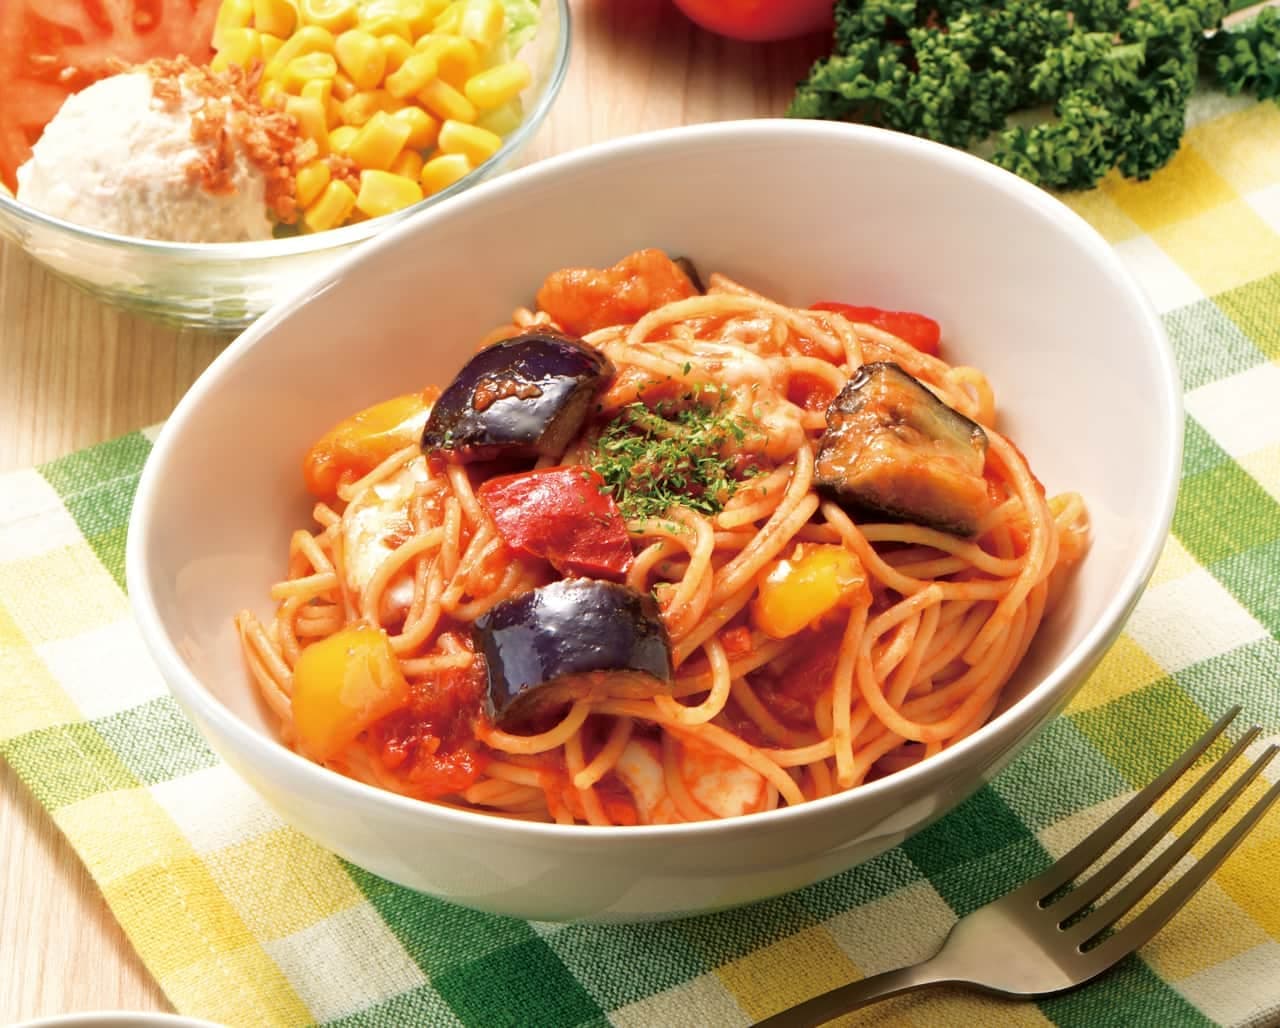 Cafe de Creates "Pasta with colorful vegetables and mozzarella in tomato sauce